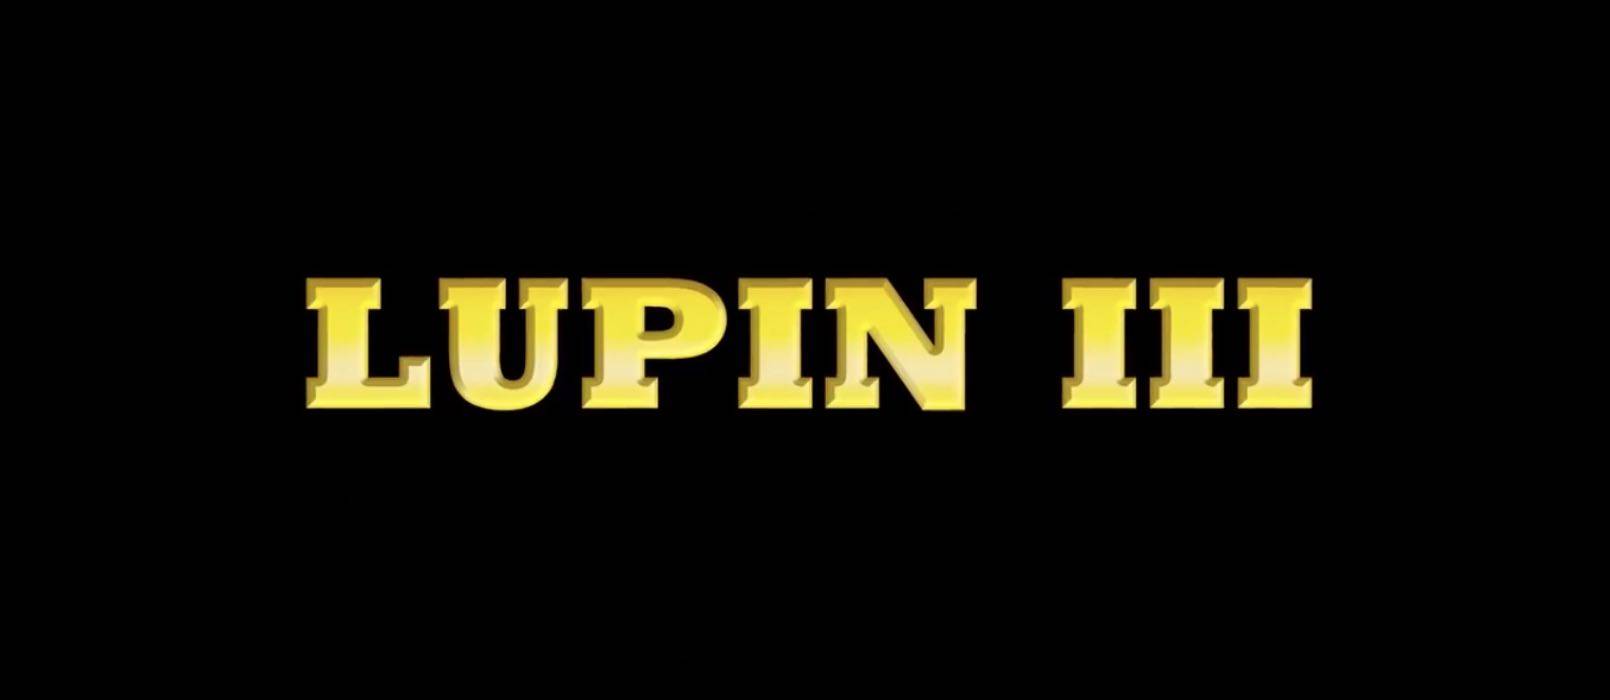 Lupin III: info, trama, cast e curiosità del film su Rai 4